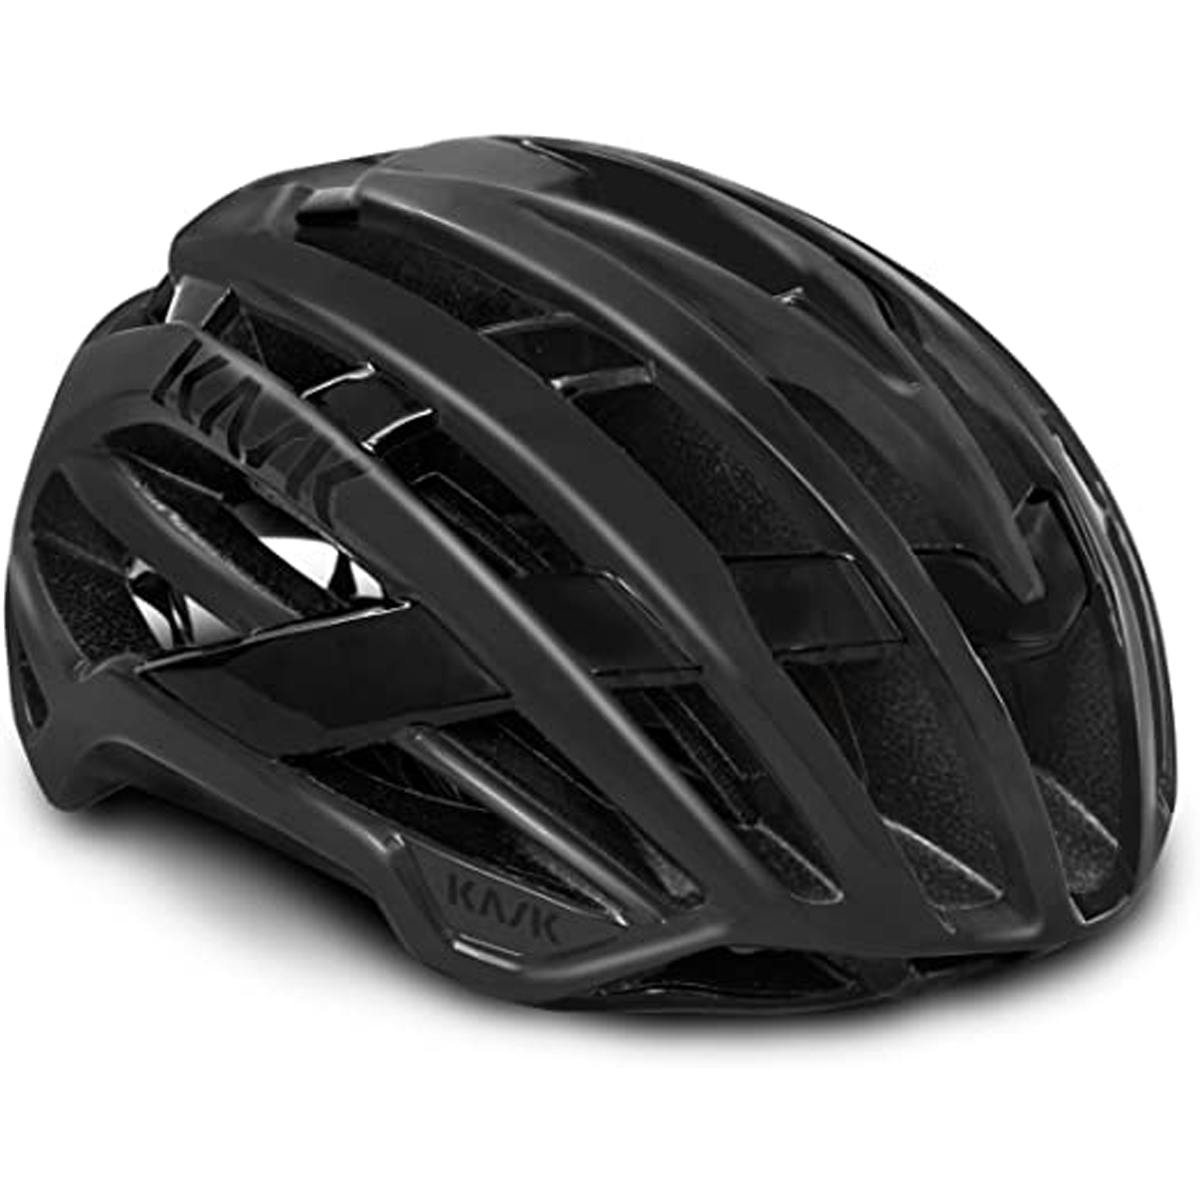 Kask Valegro Bike Helmet